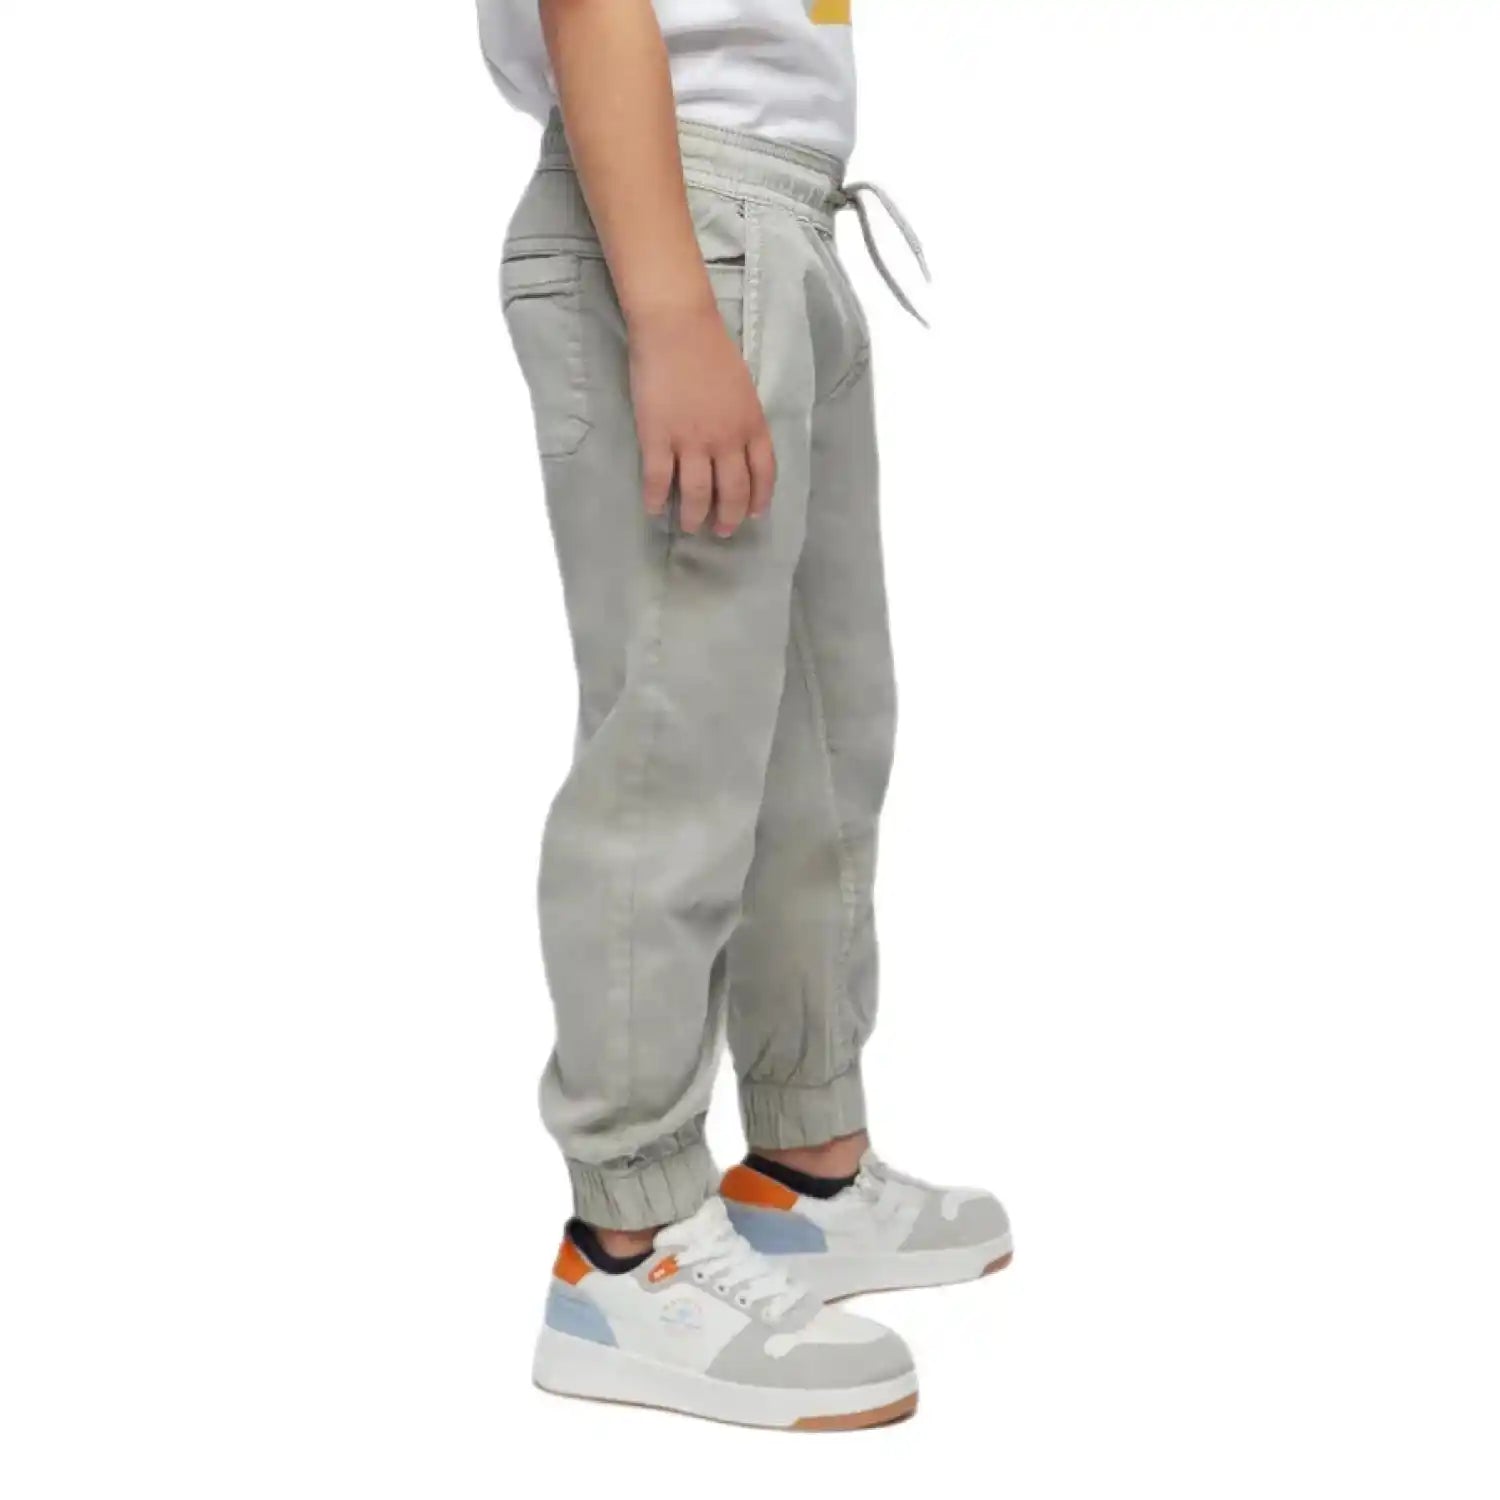 Mayoral K's Skater Pants, Dust, side view on model